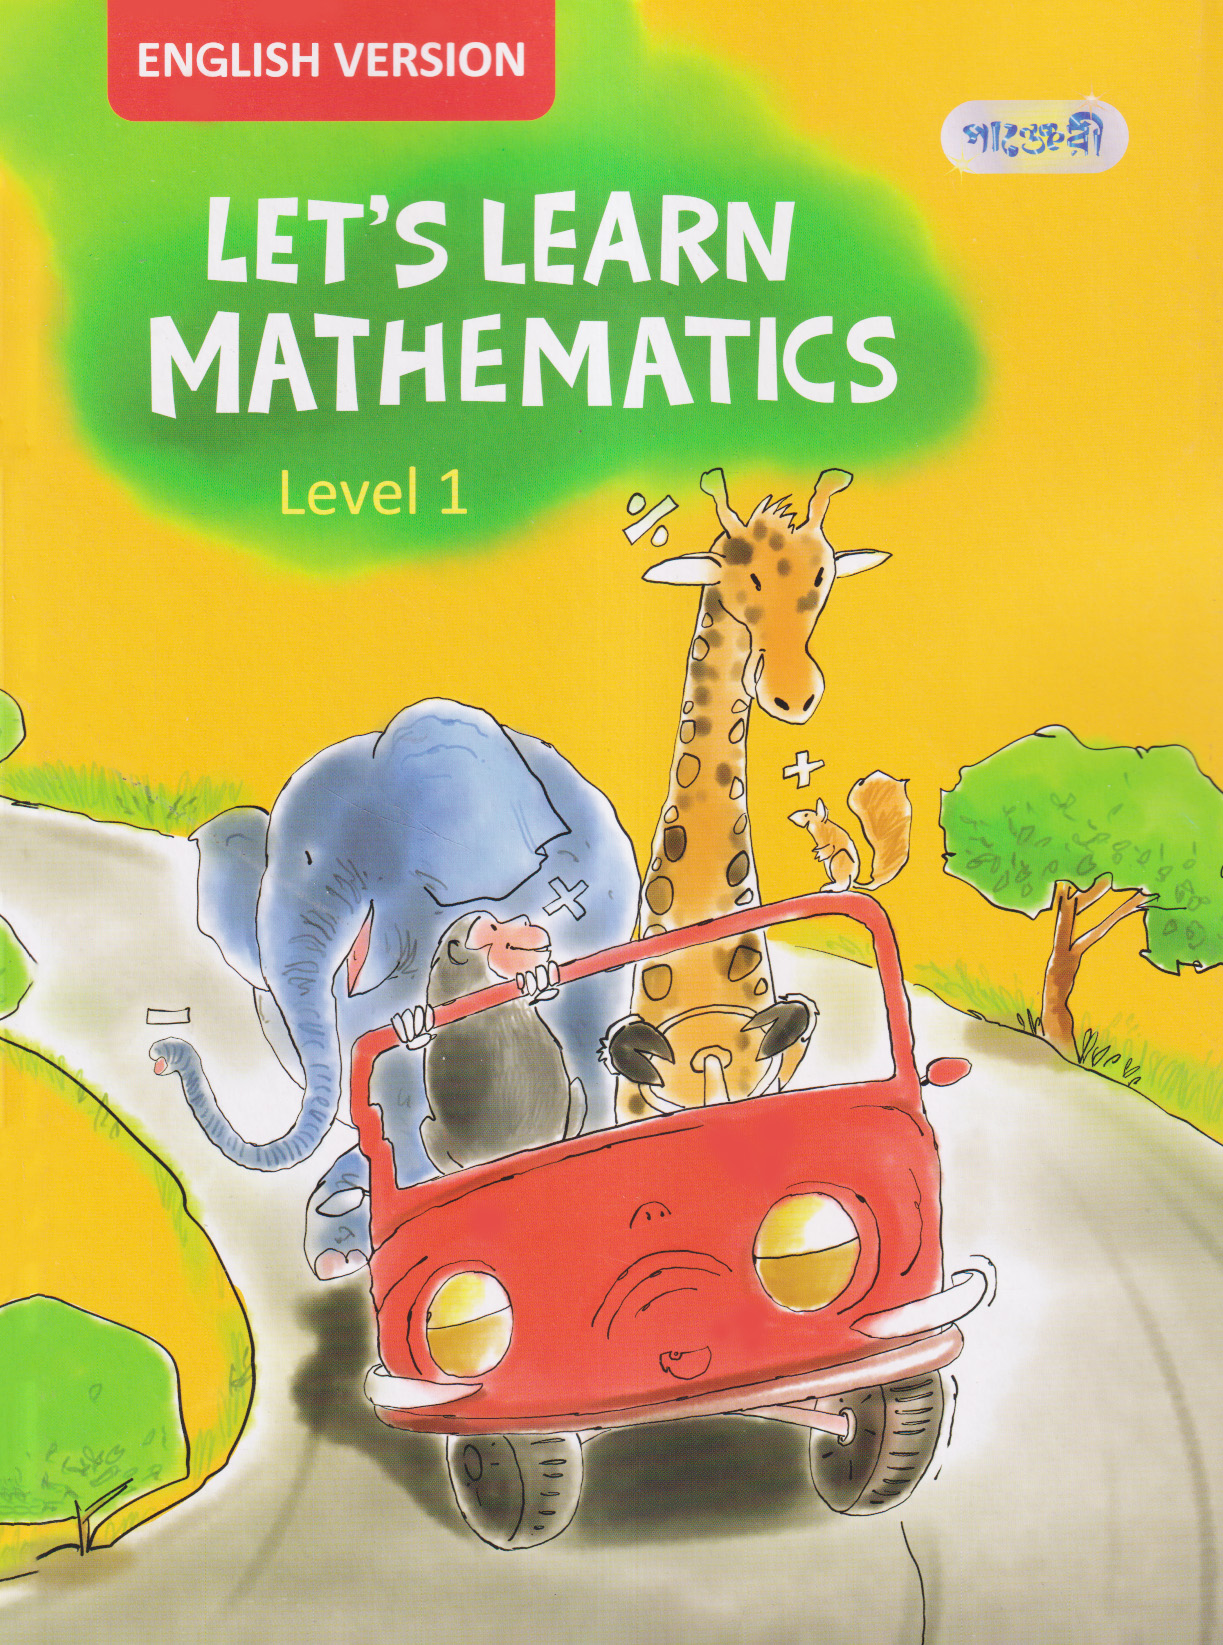 Let's Learn Mathematics, Level 1 For Nursery - English Version (পেপারব্যাক)